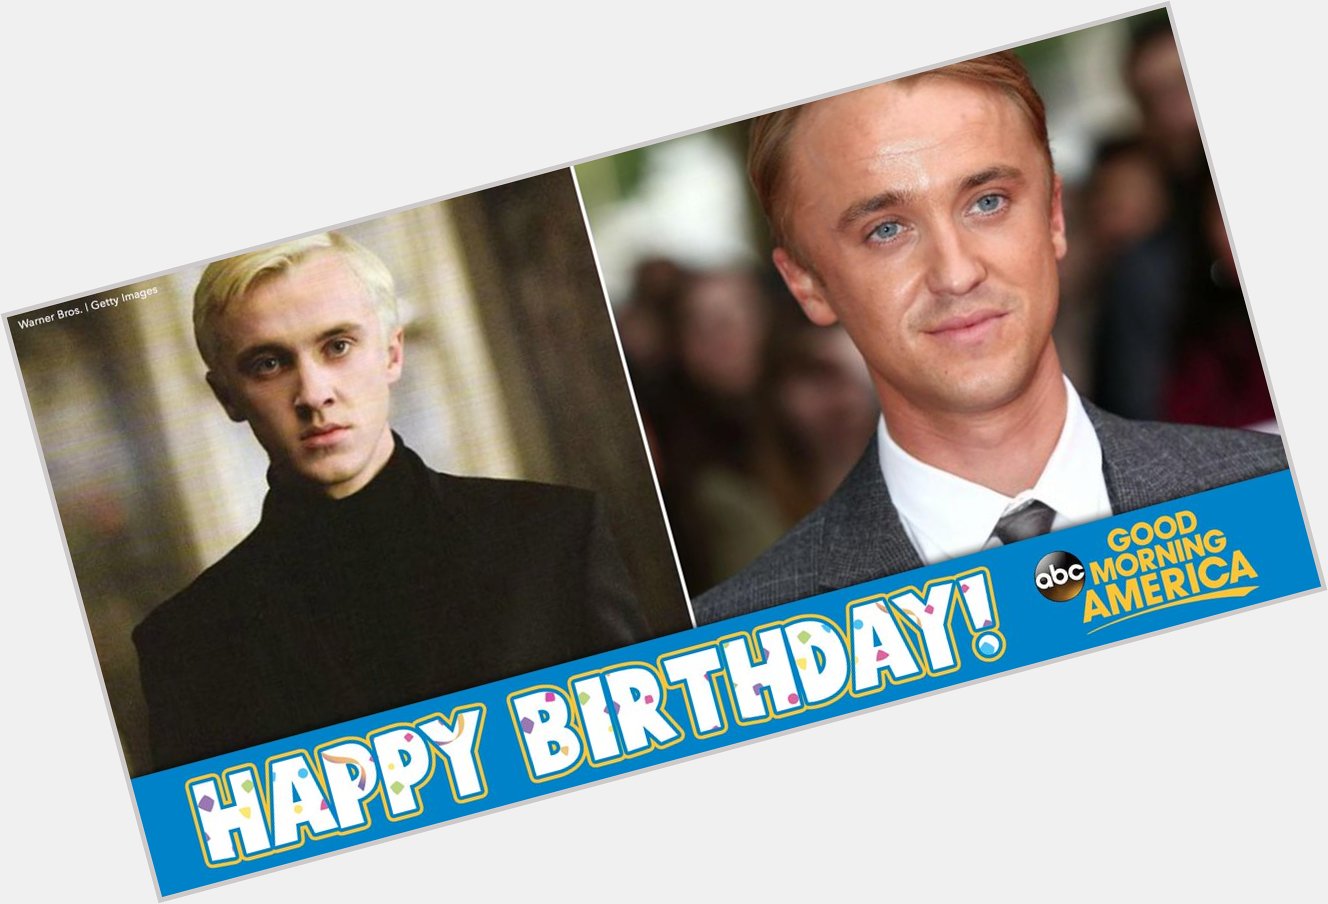 Happy Birthday to Draco Malfoy himself: Tom Felton! The actor turns 28 today.  